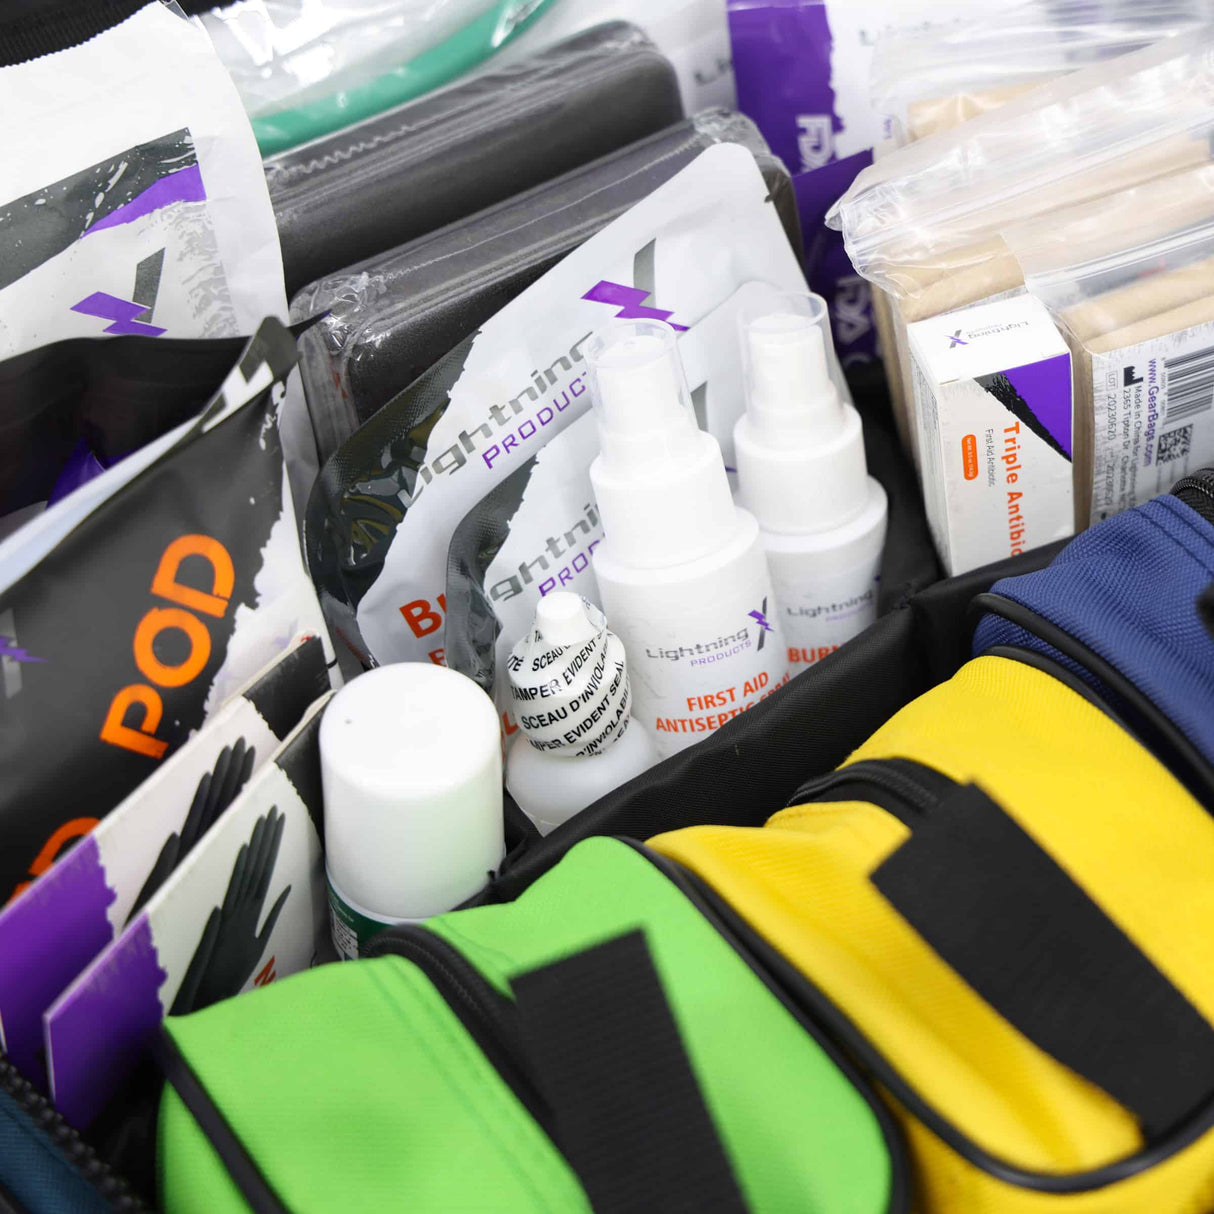 Lightning X Premium Medical Trauma Bag w/Fill Kit F, Filled Trauma Bag, Lightning X,I Tactical Medicine